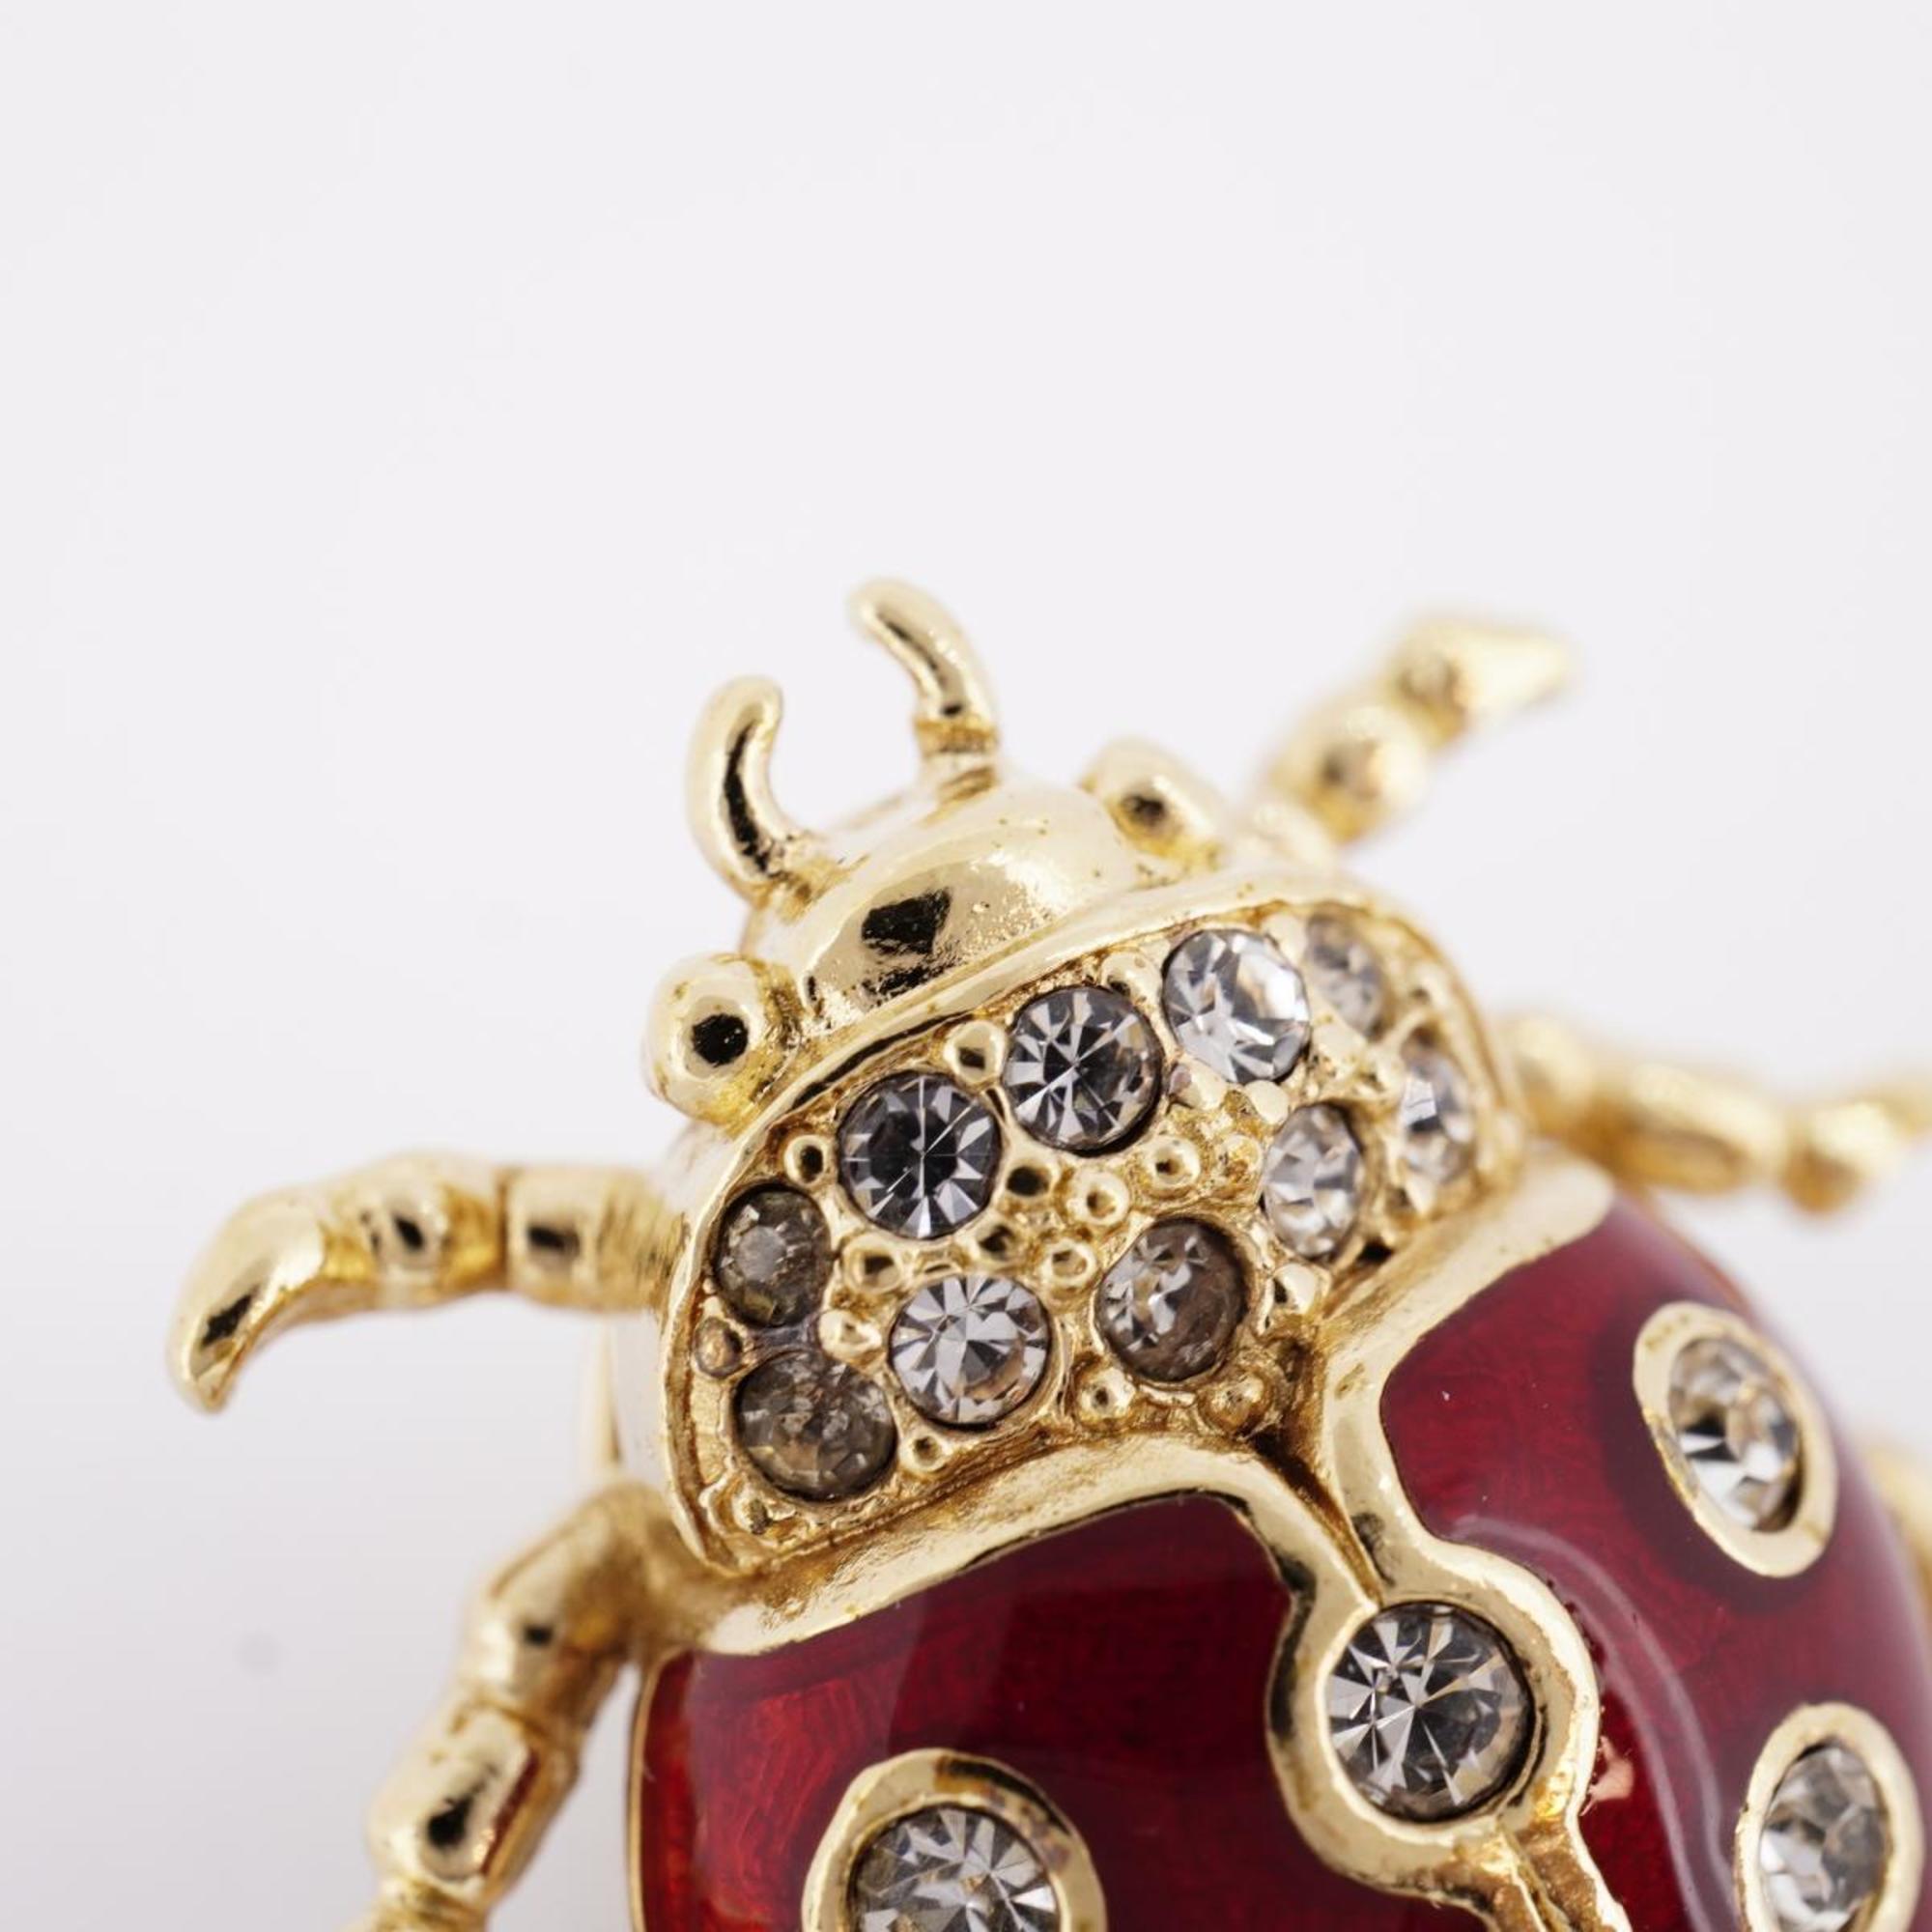 Christian Dior Brooch Ladybug Motif Rhinestone GP Plated Gold Red Women's